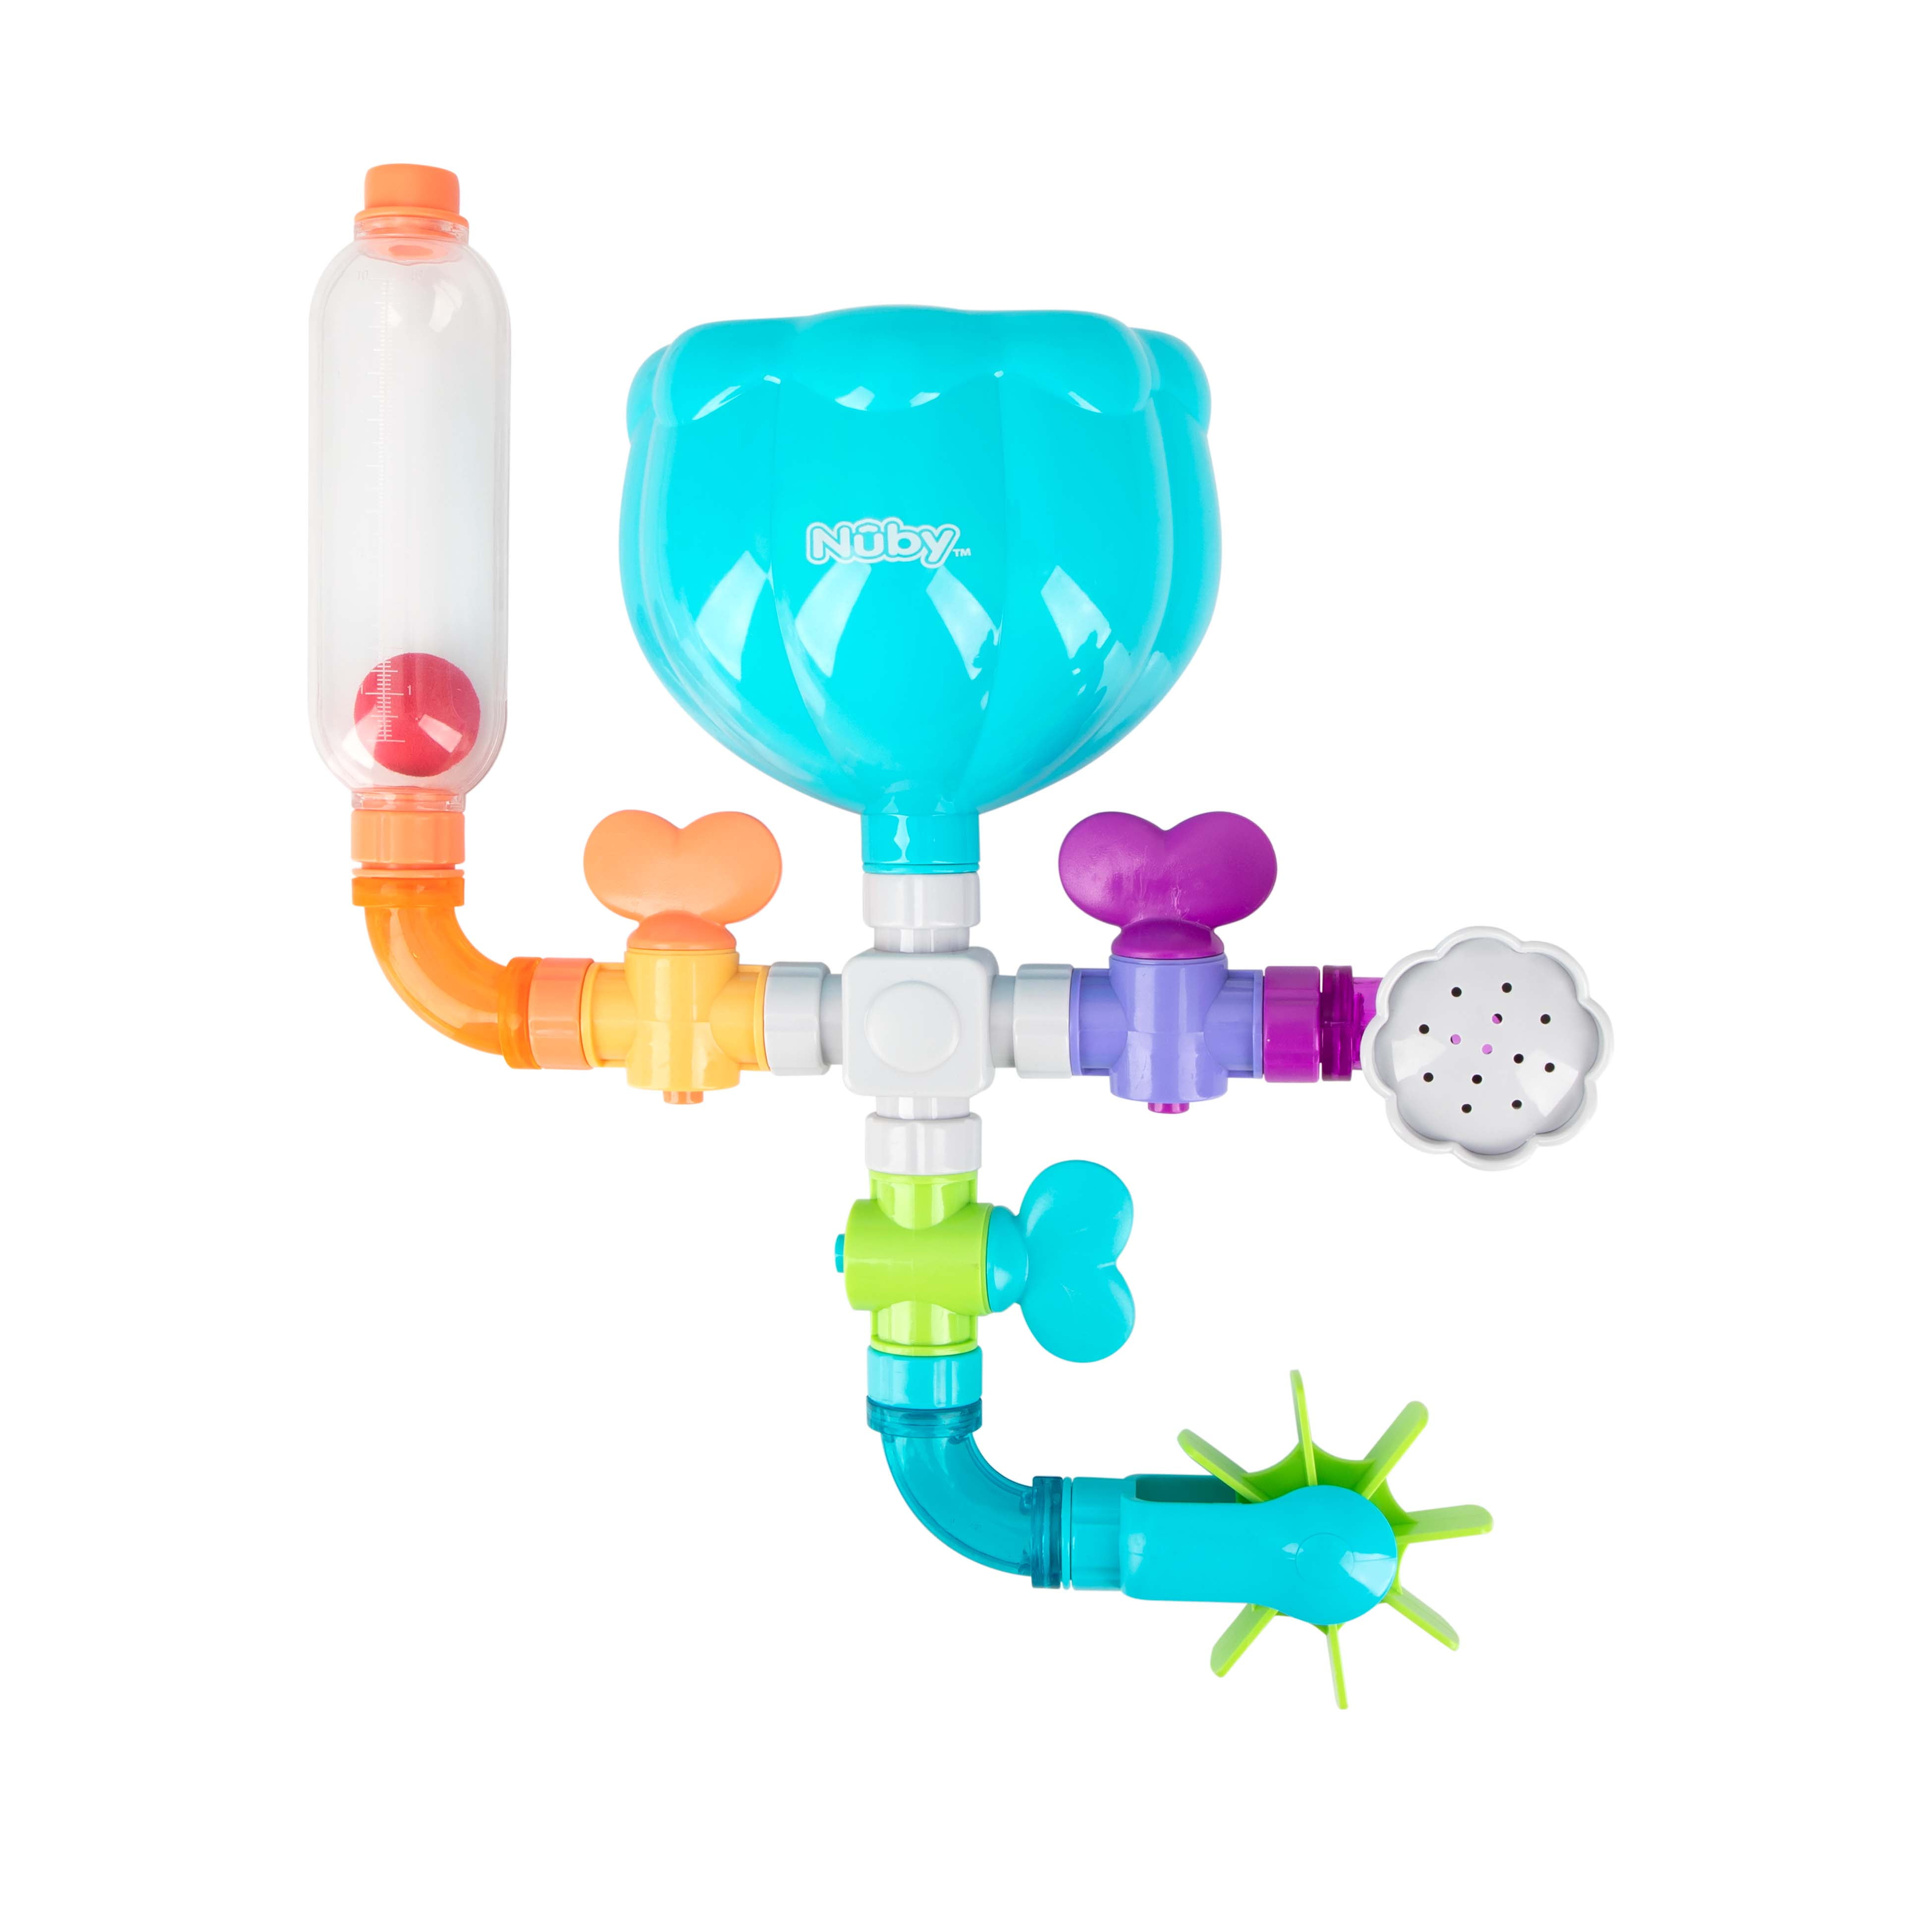 Nuby Wacky Waterworks Interactive Bath Toy for Baby